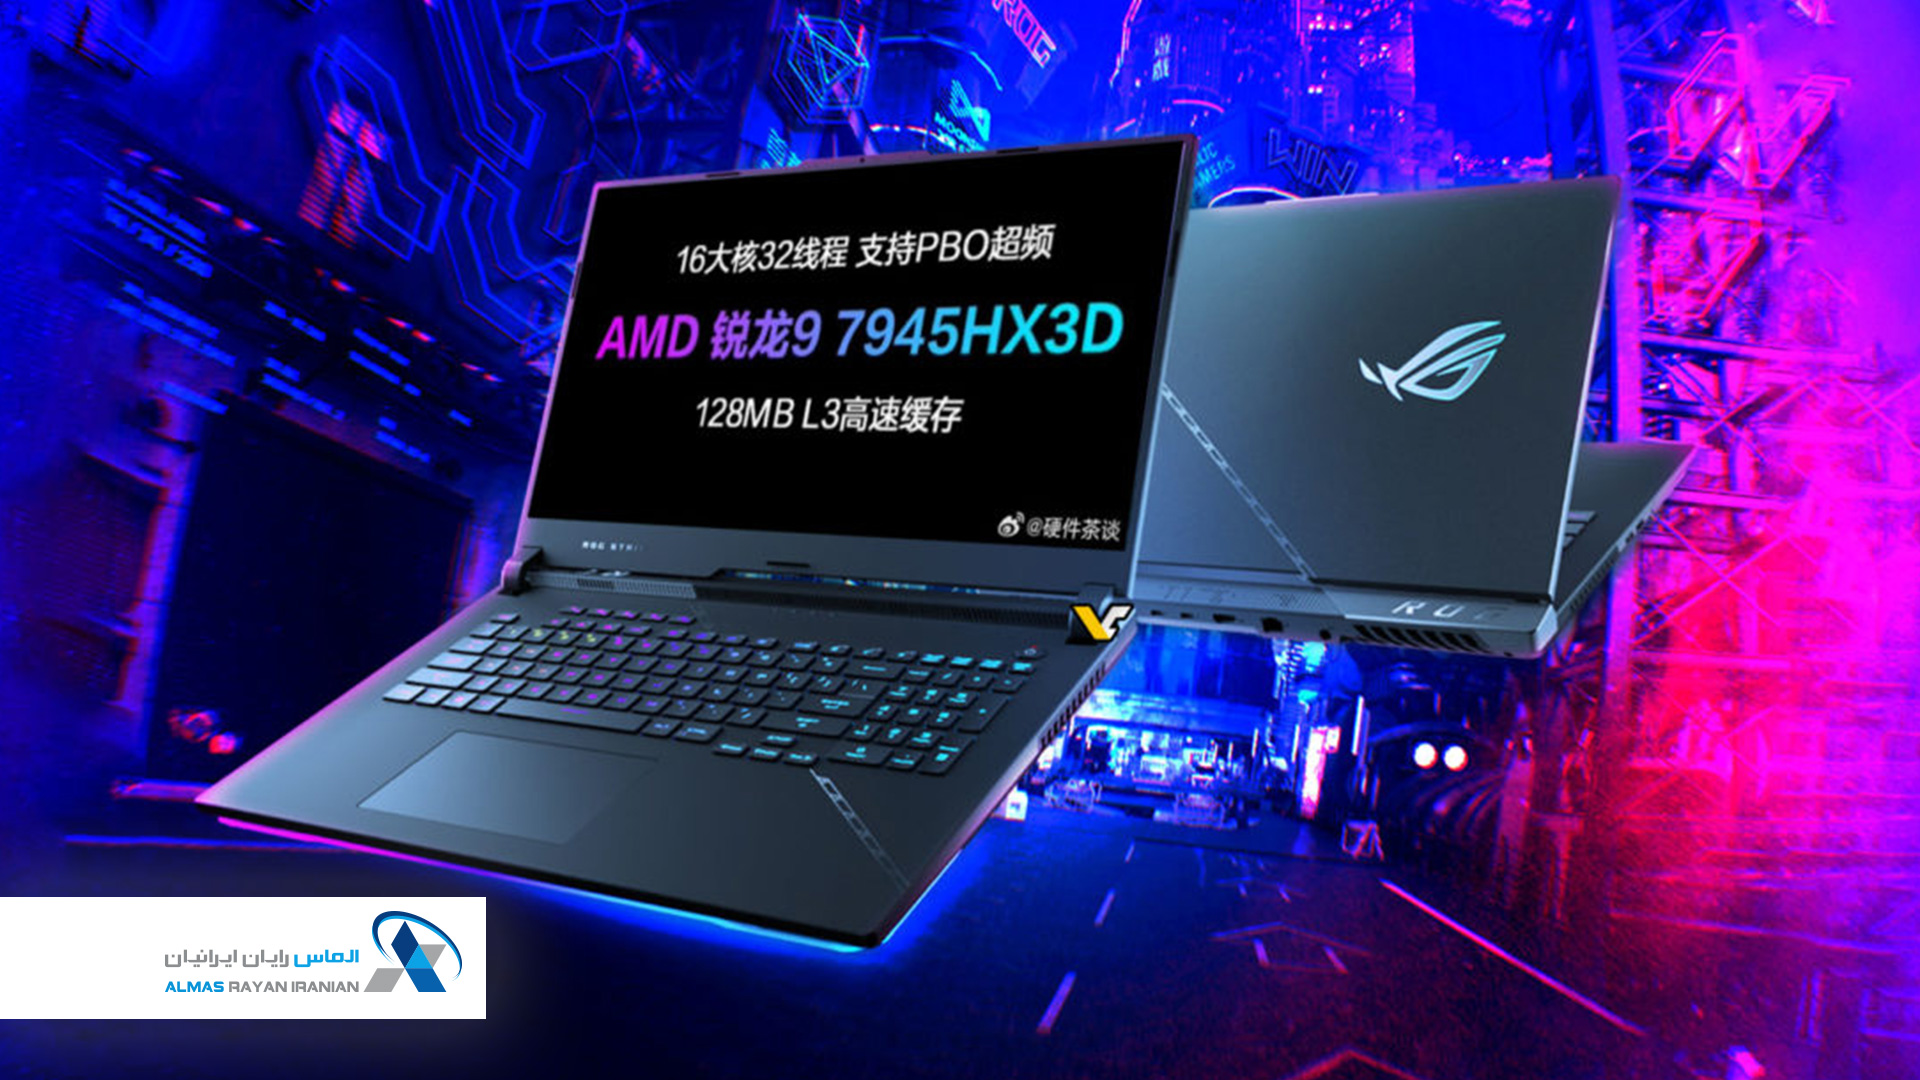 ASUS-ROG-laptop-with-AMD-Ryzen-9-7945HX3D-CPU